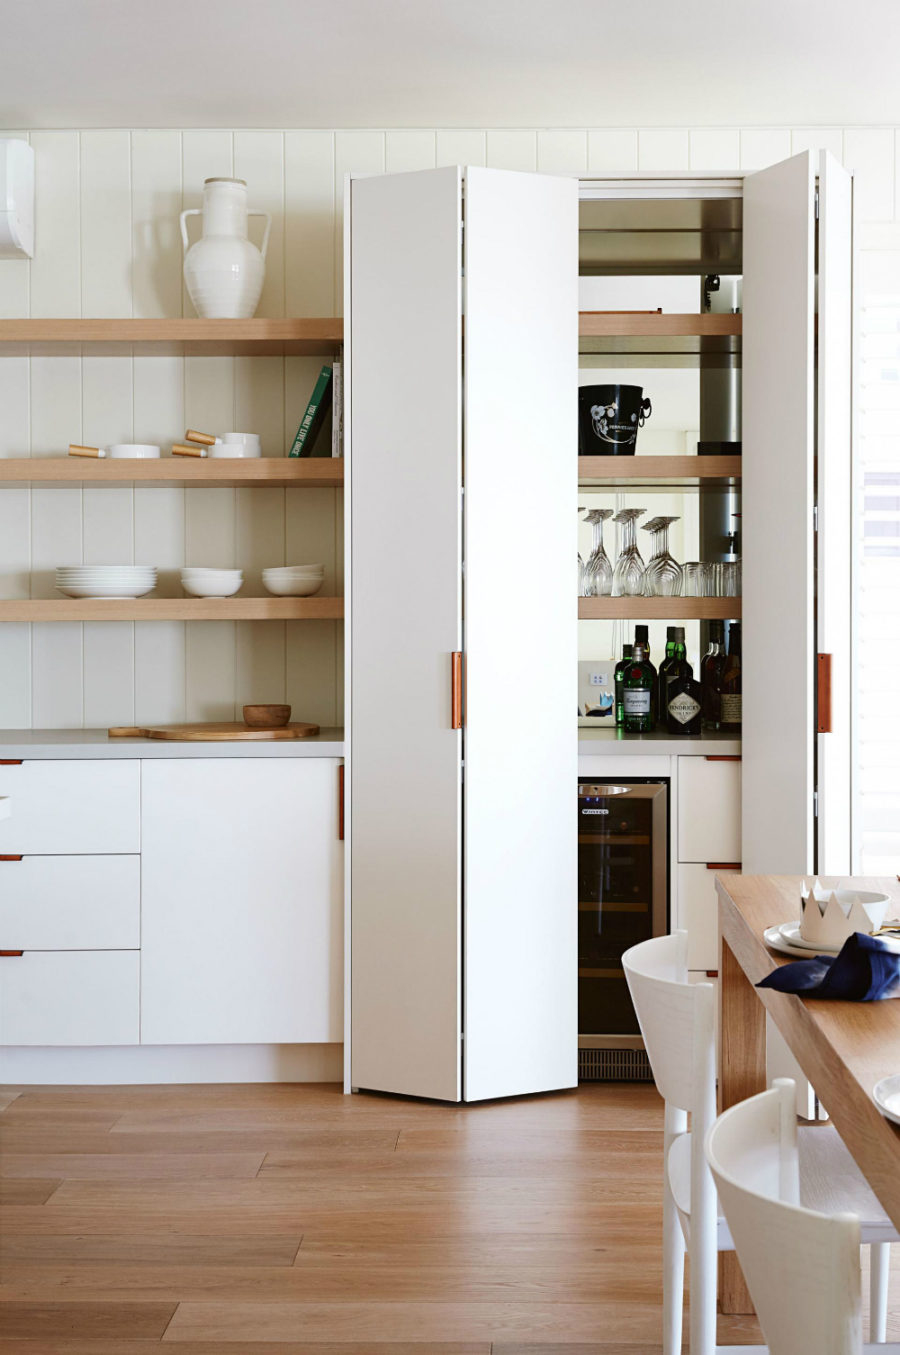 Sleek kitchen pantry